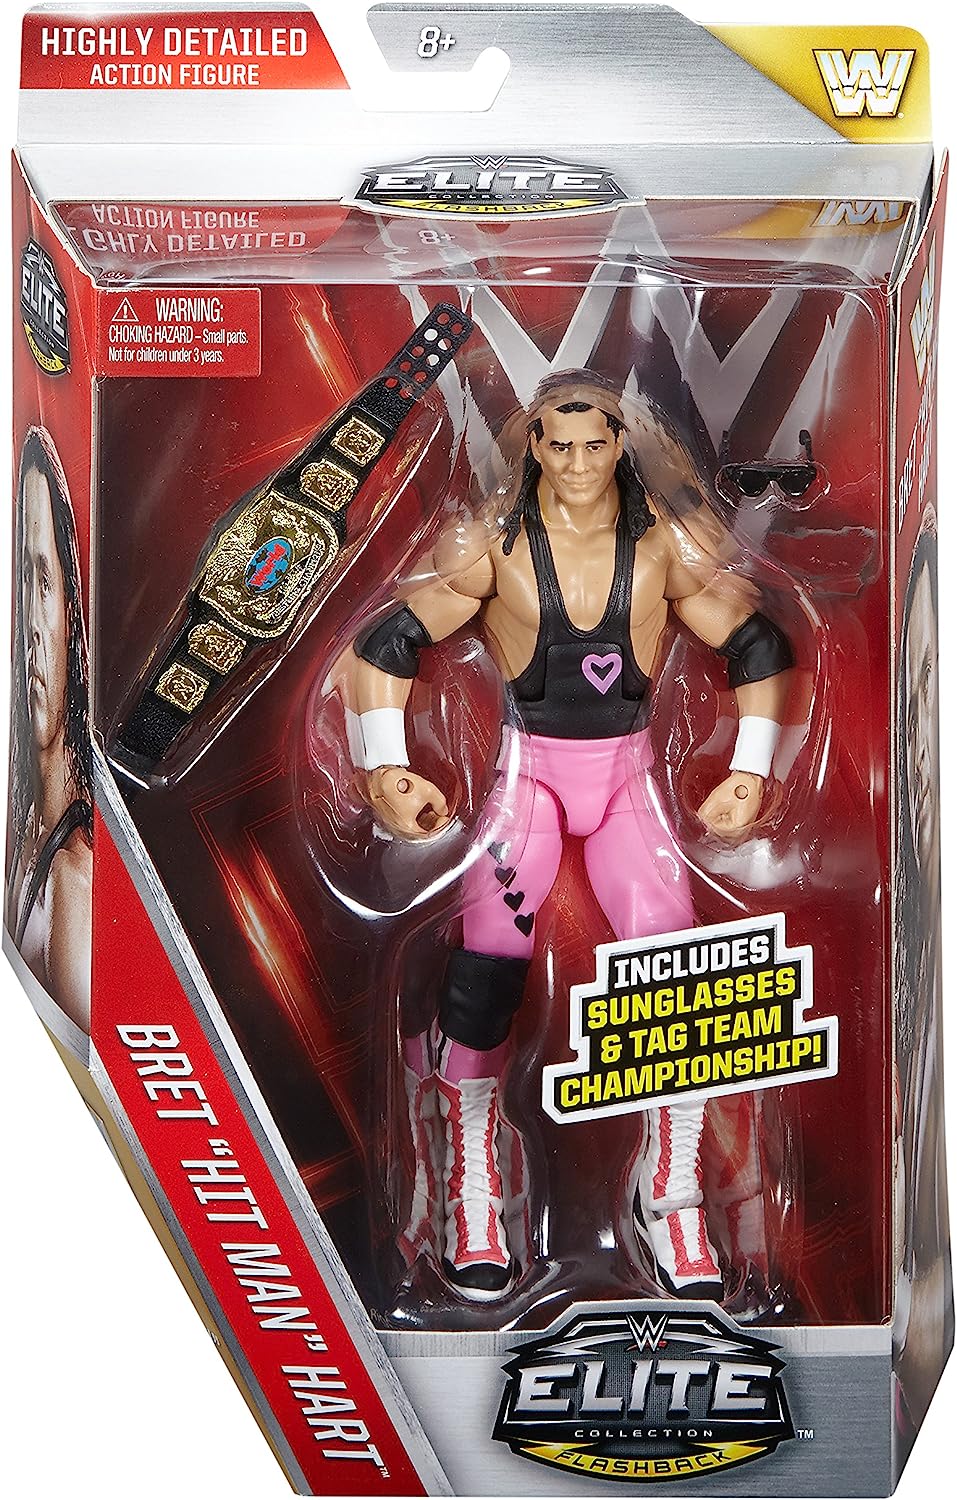 Mattel WWE Elite Collection Flashback Bret "Hit Man" Hart